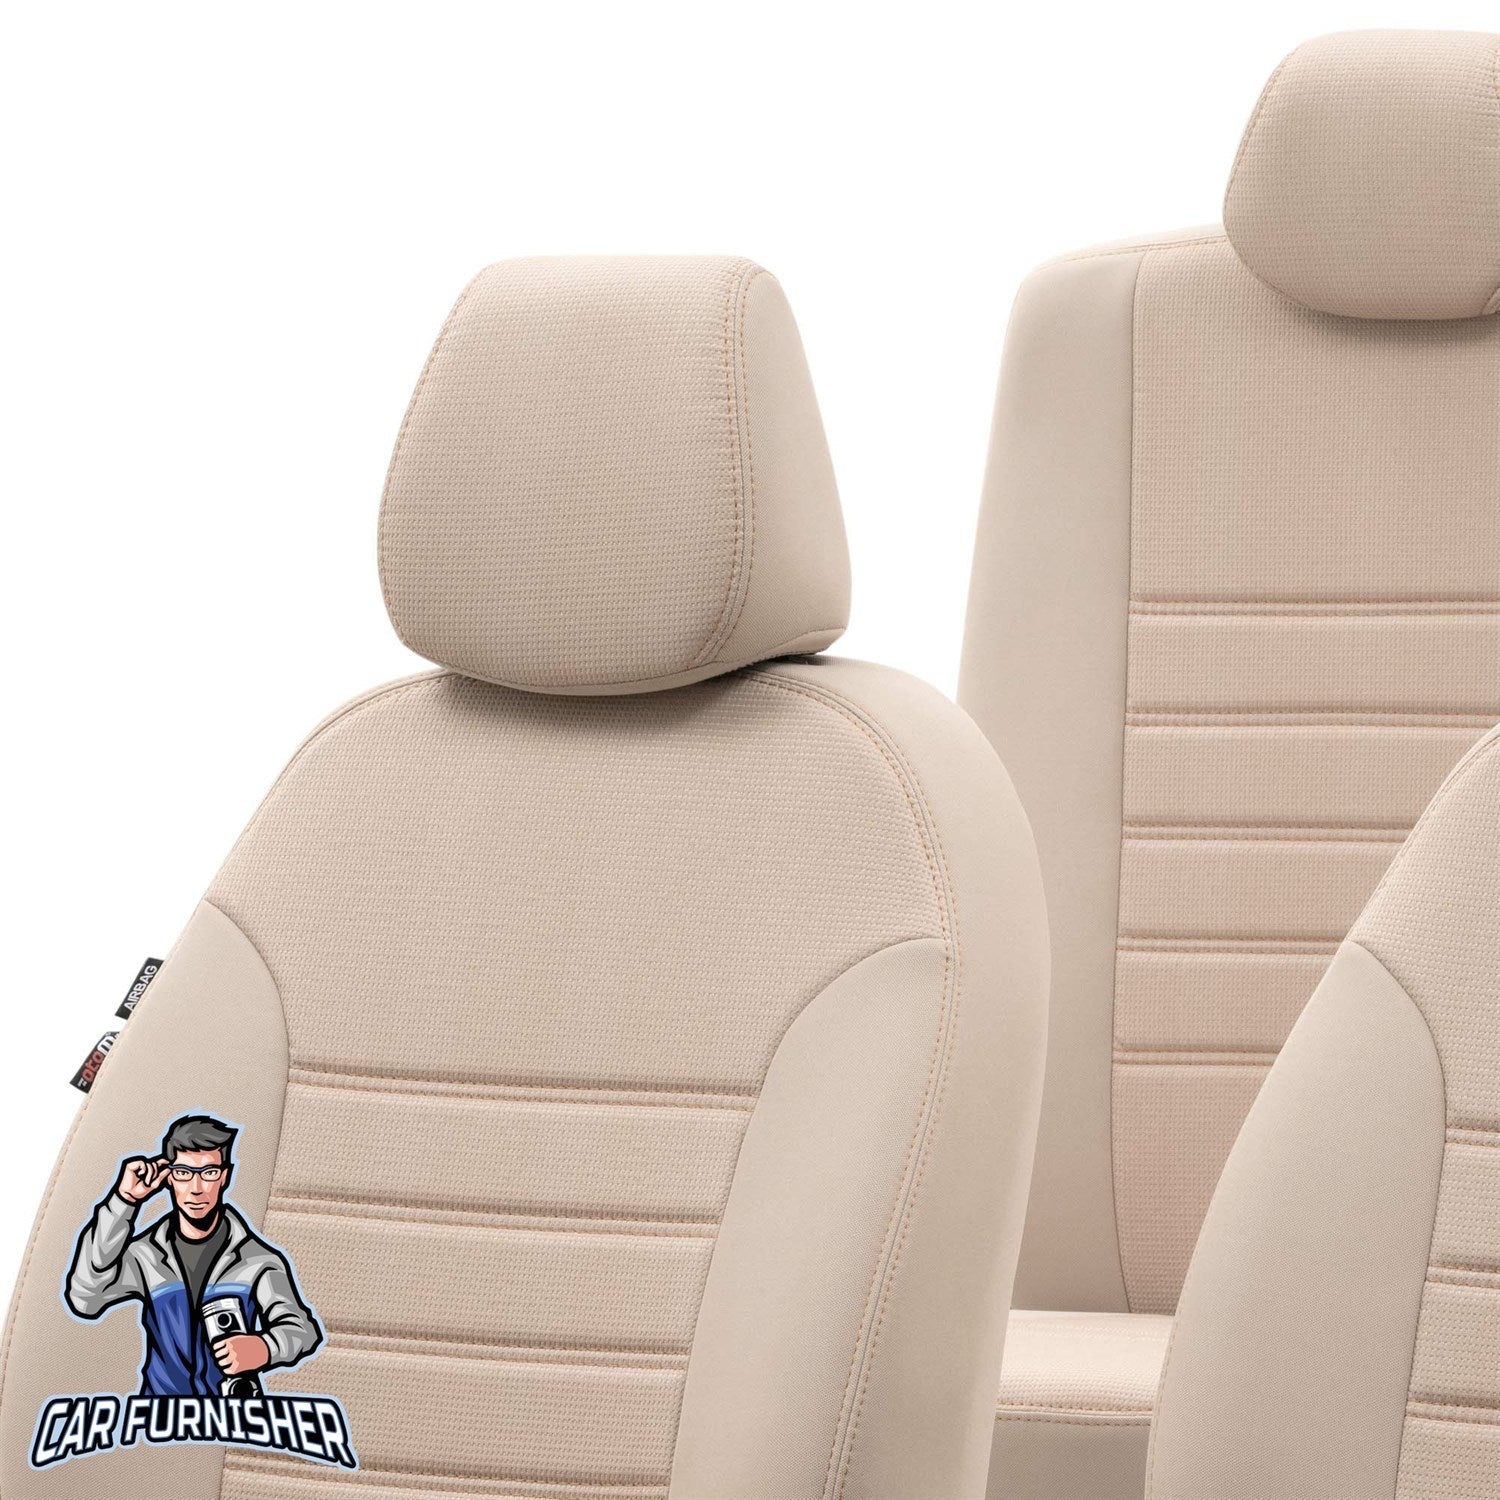 Opel Frontera Seat Cover Original Jacquard Design Beige Jacquard Fabric